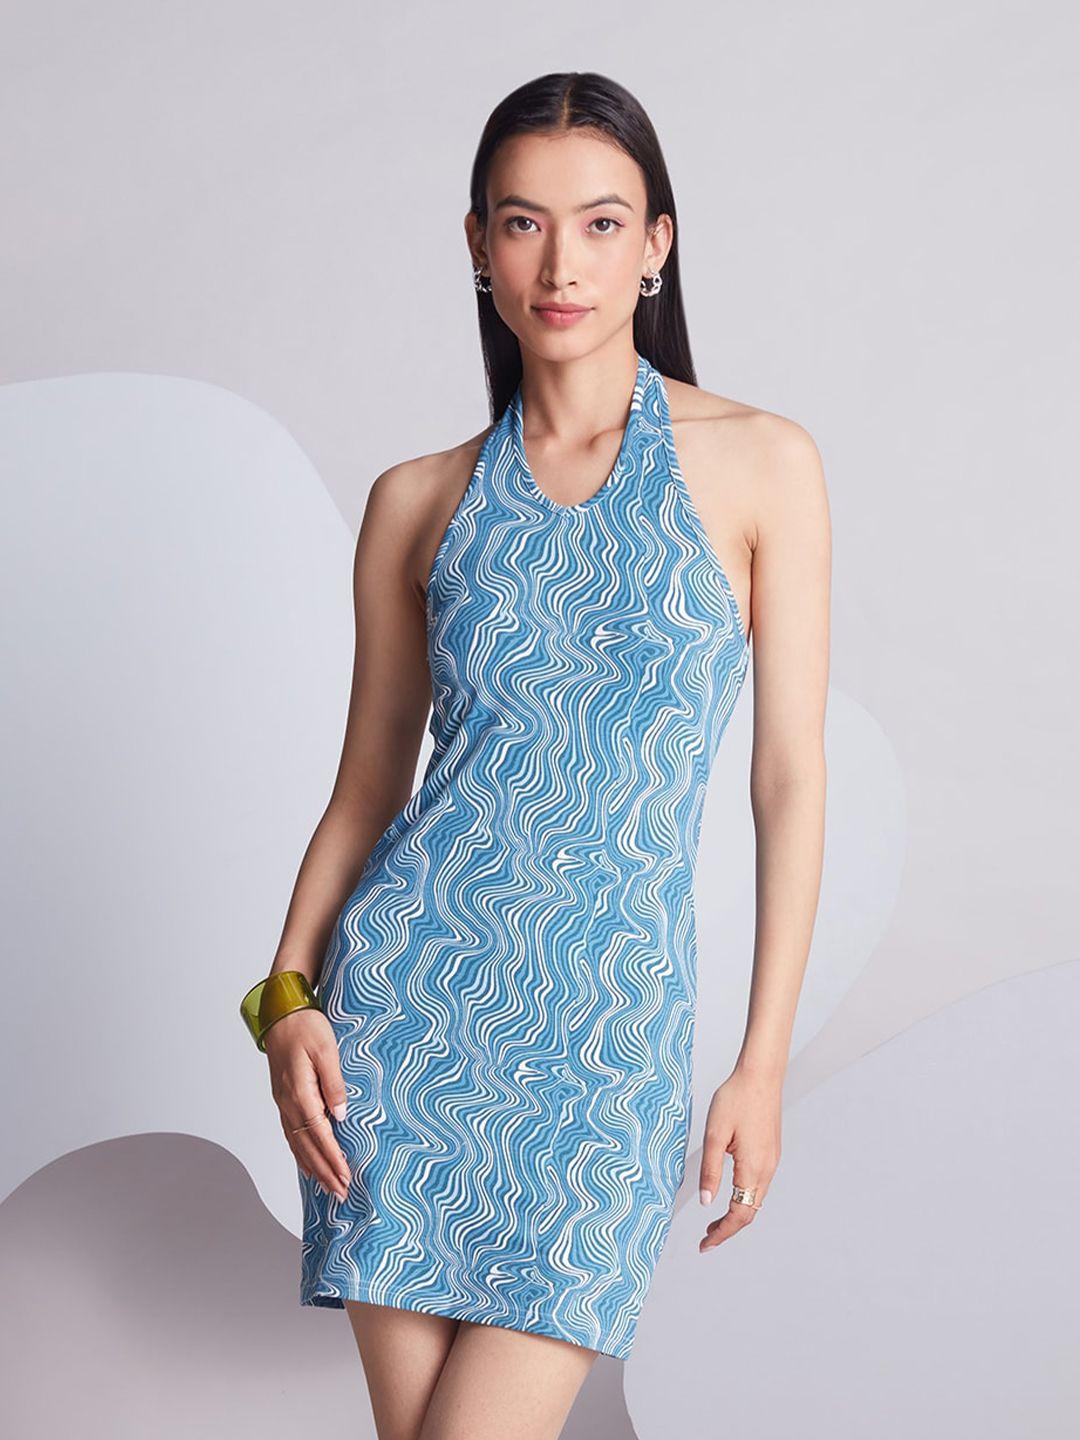 20dresses abstract printed halter neck sheath dress